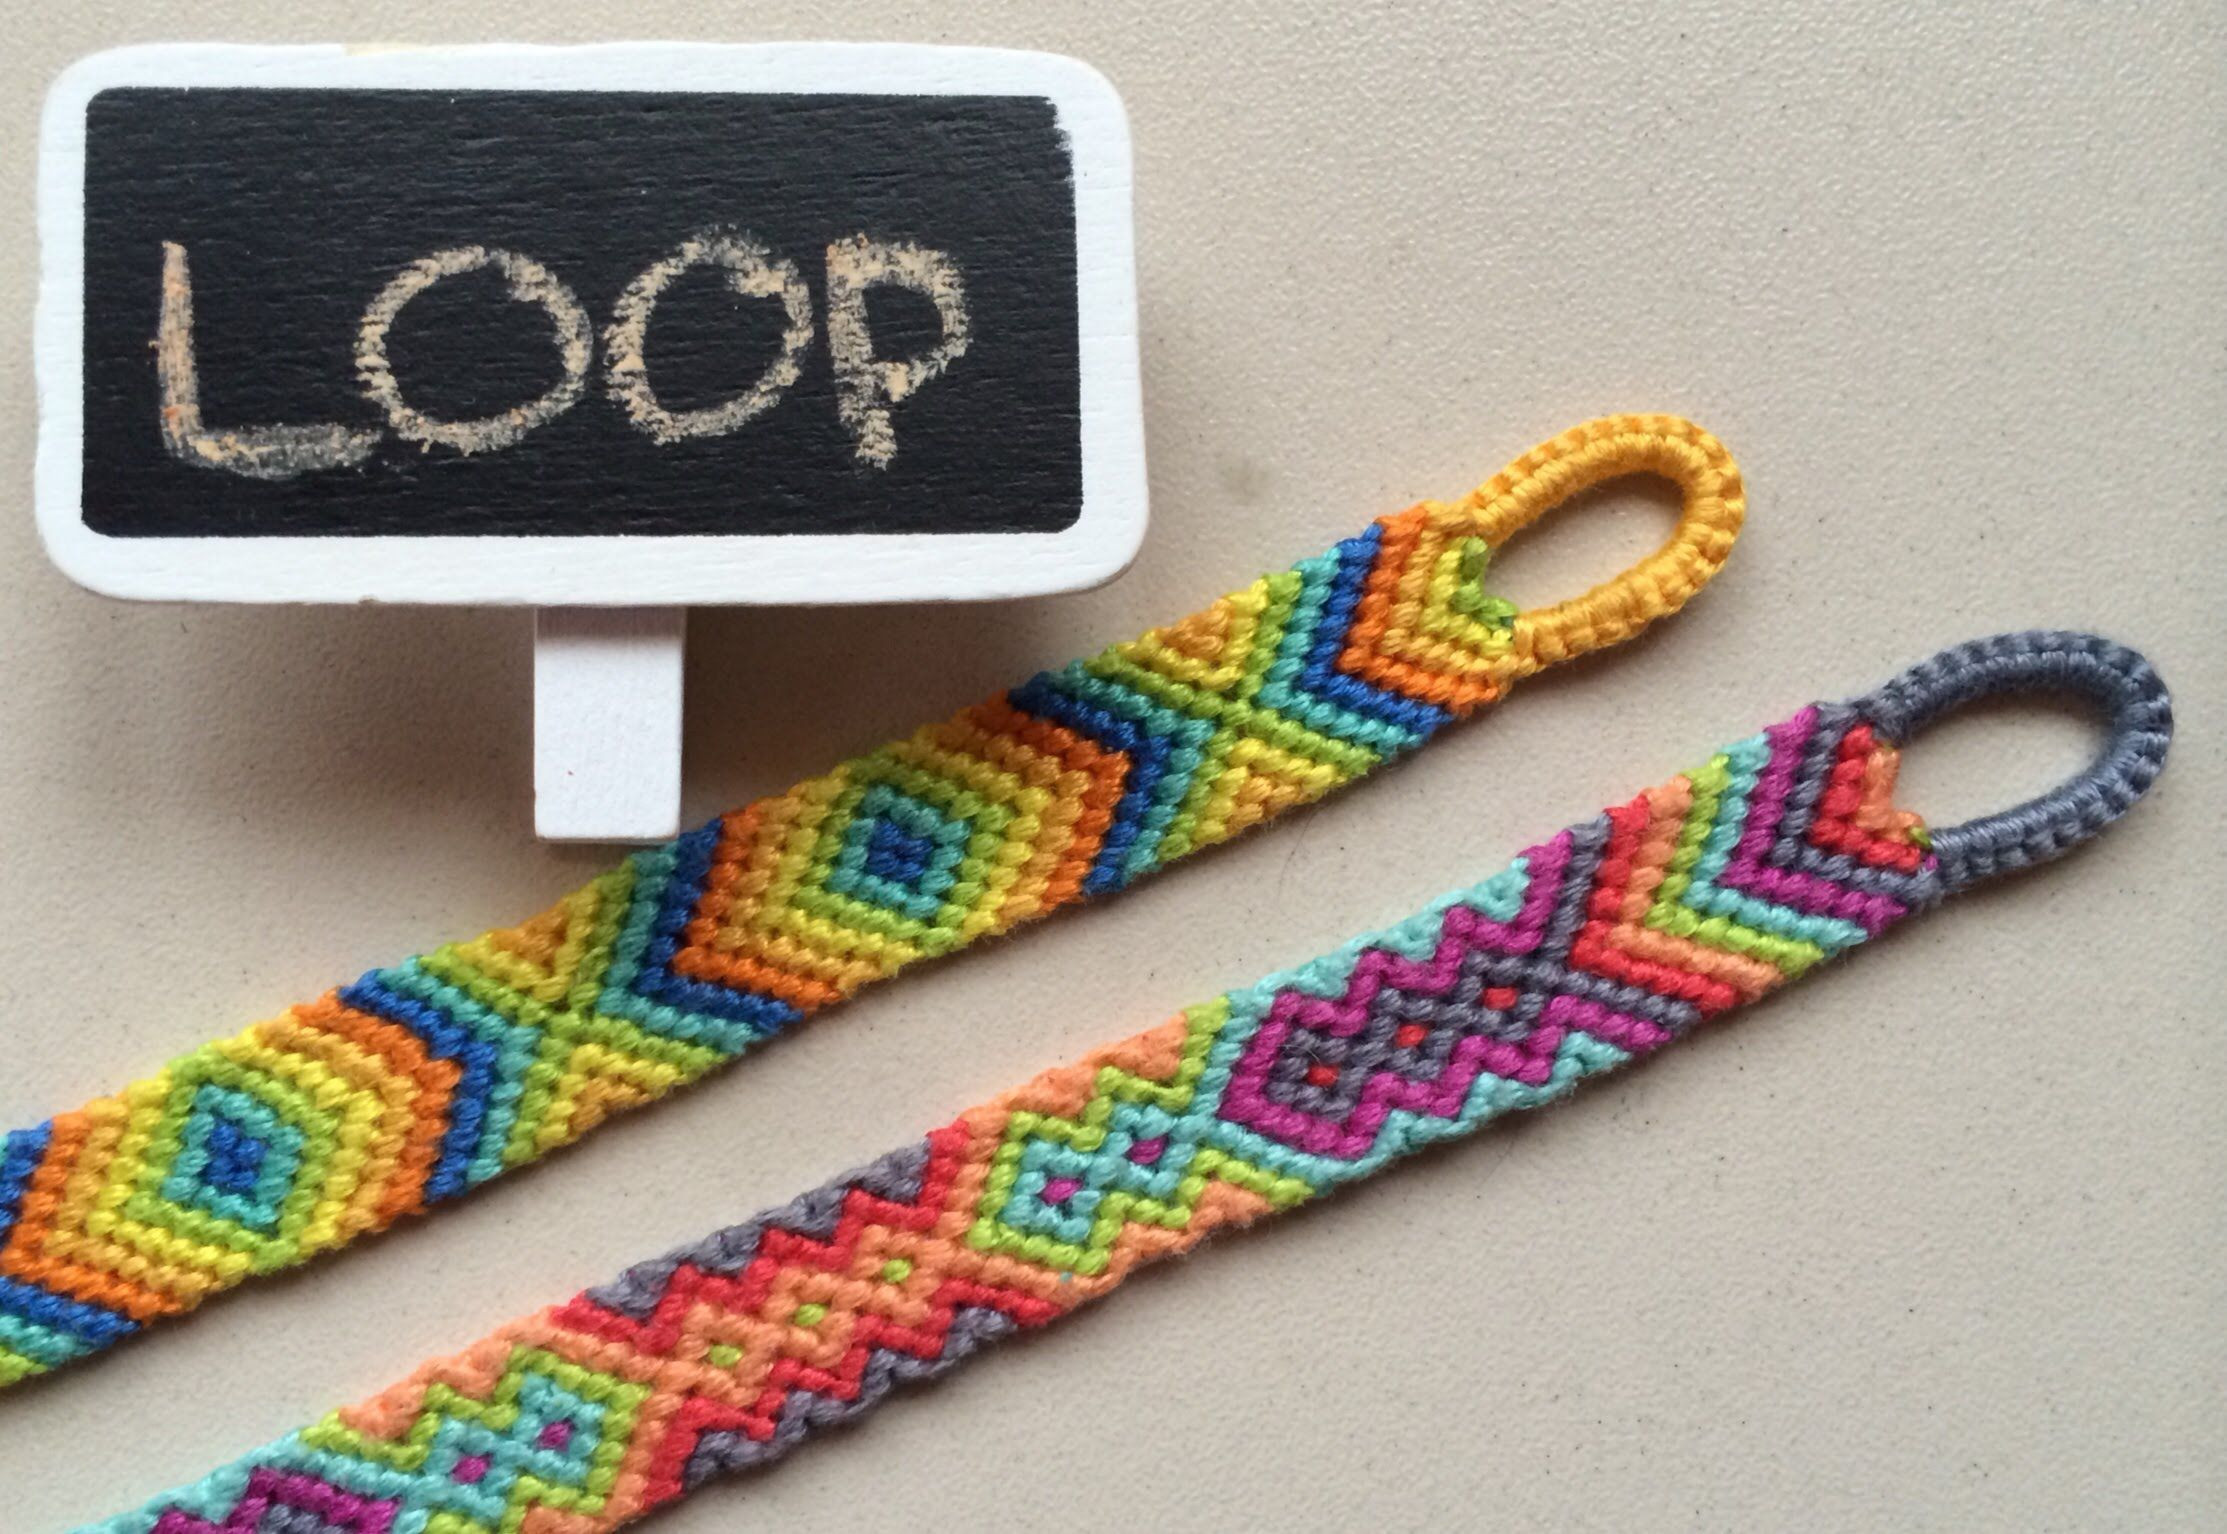 Best ideas about DIY Friendship Bracelets Patterns
. Save or Pin DIY Easy beginning LOOP for friendship bracelets Now.